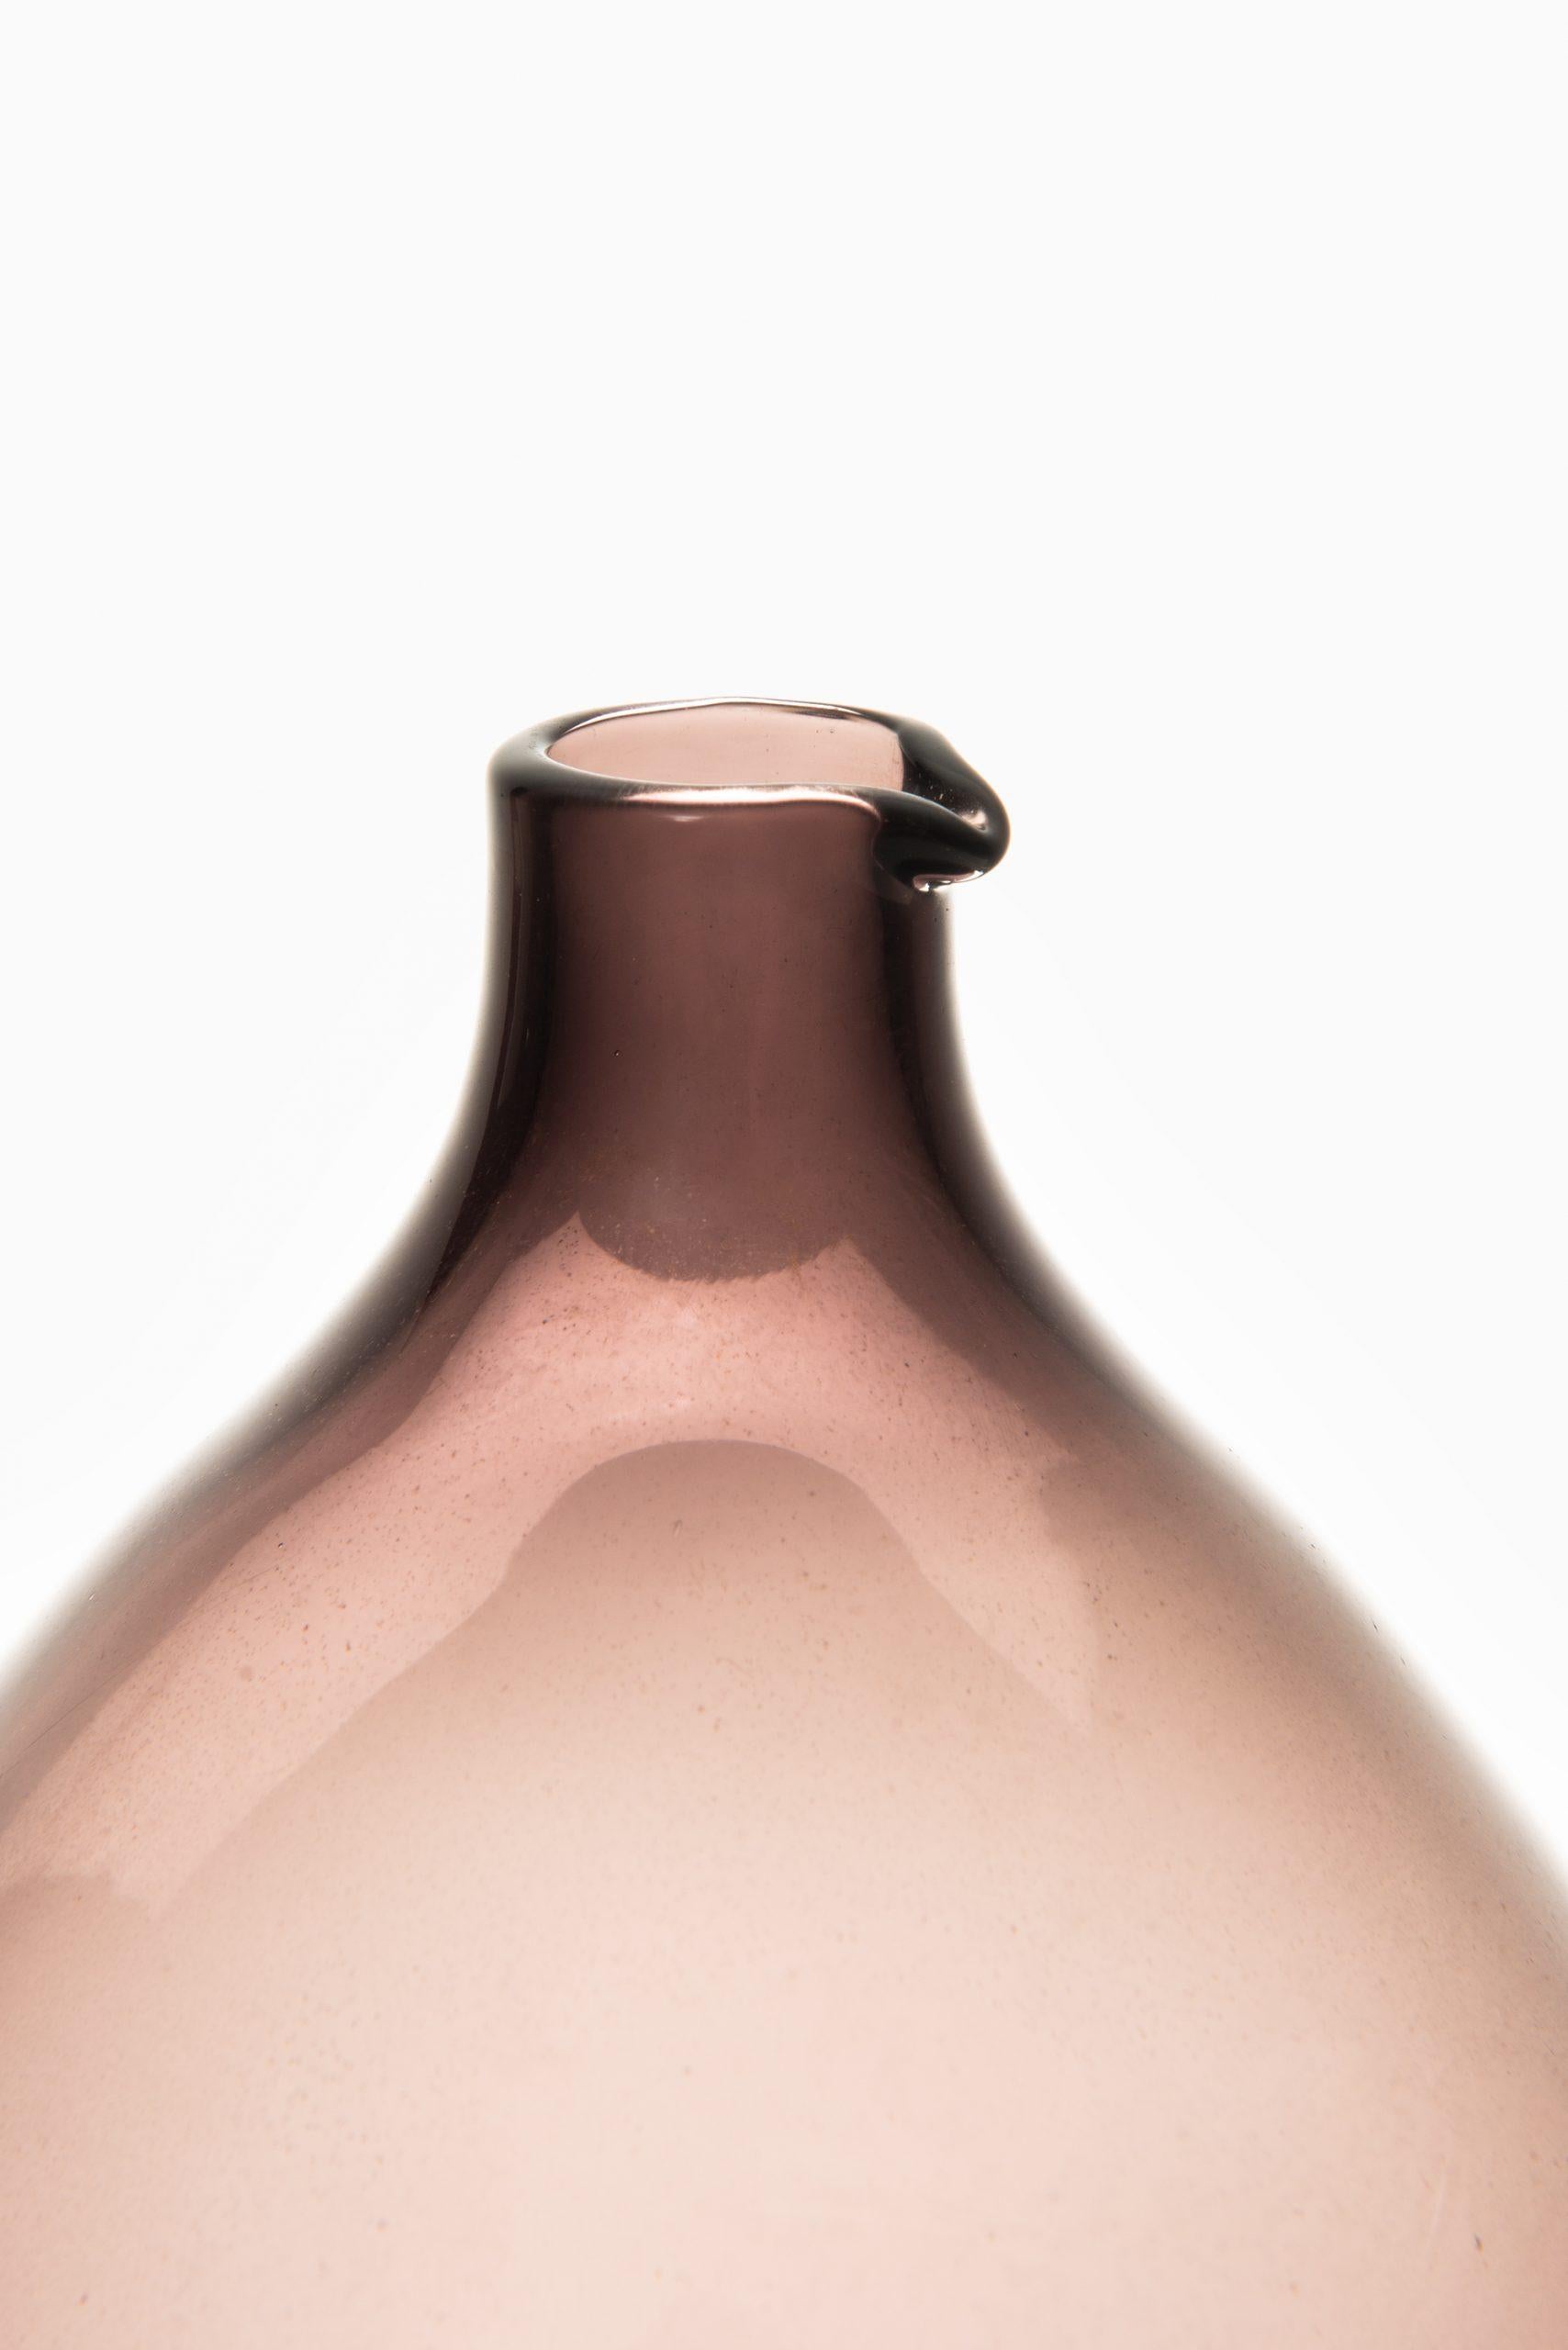 Glass bottle / vase model Pullo / Bird vase designed by Timo Sarpaneva. Produced by Iittala in Finland. 